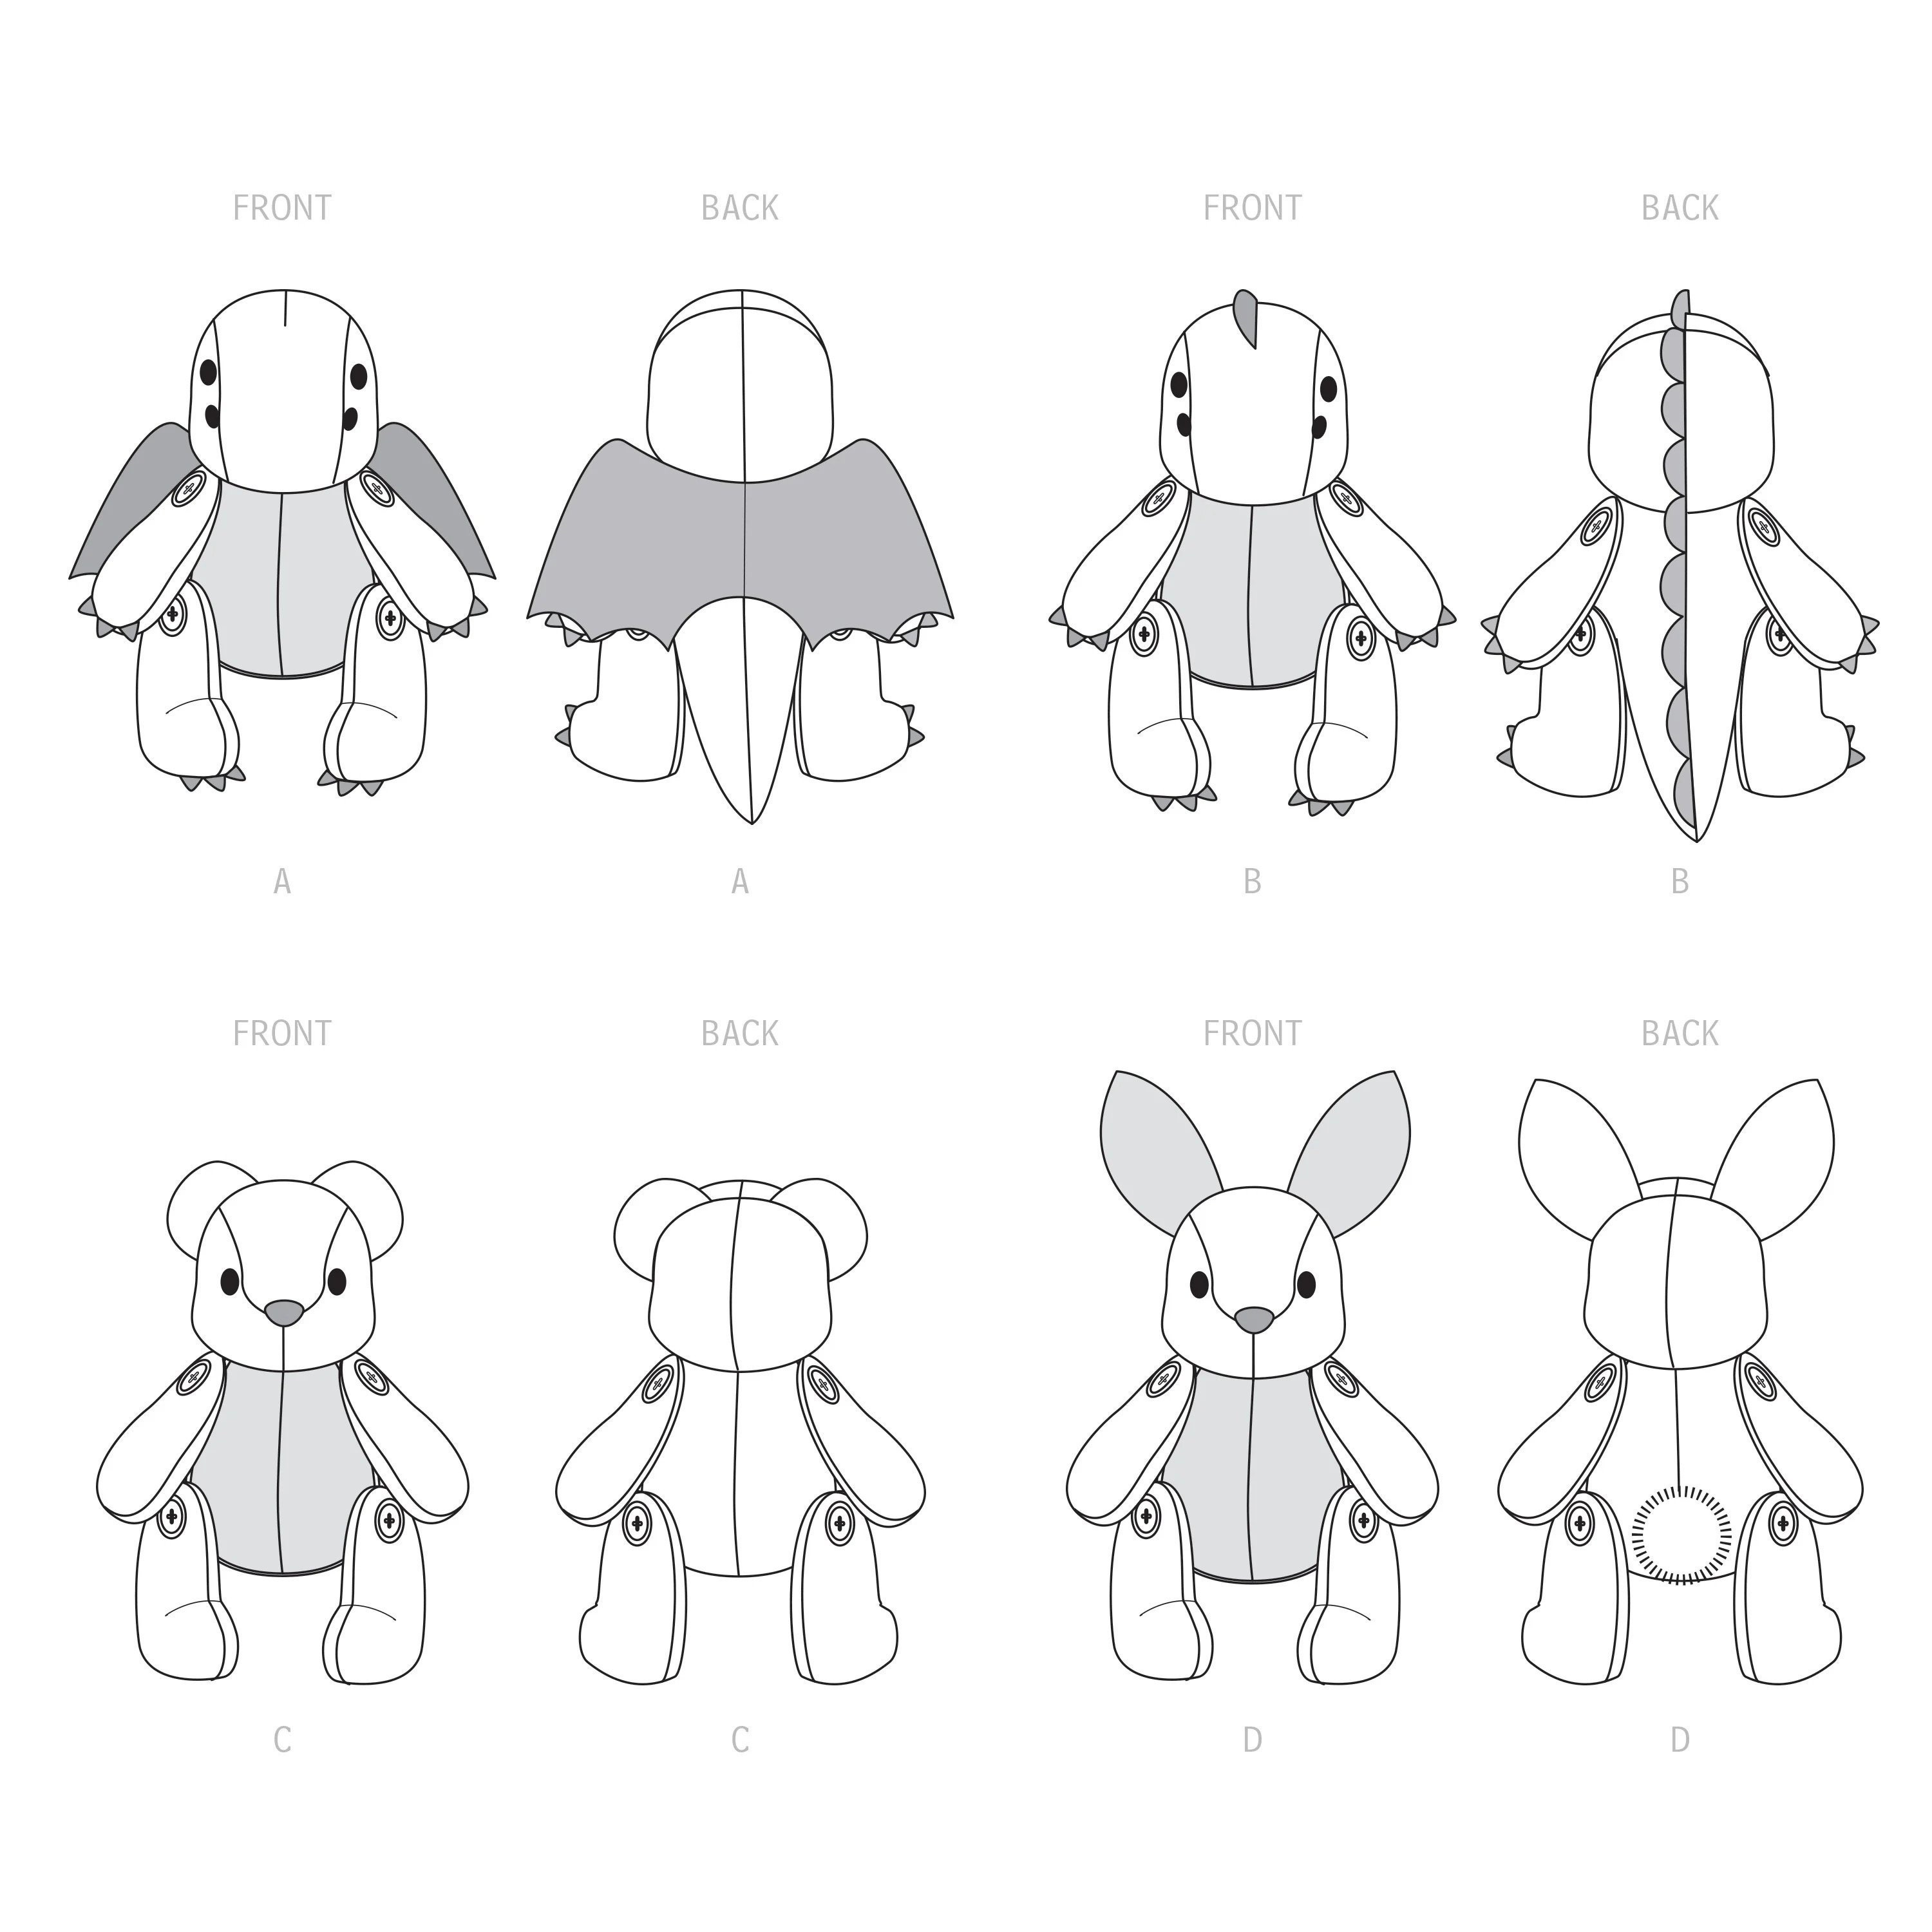 Simplicity S9441 Stuffed Animal Sewing Pattern